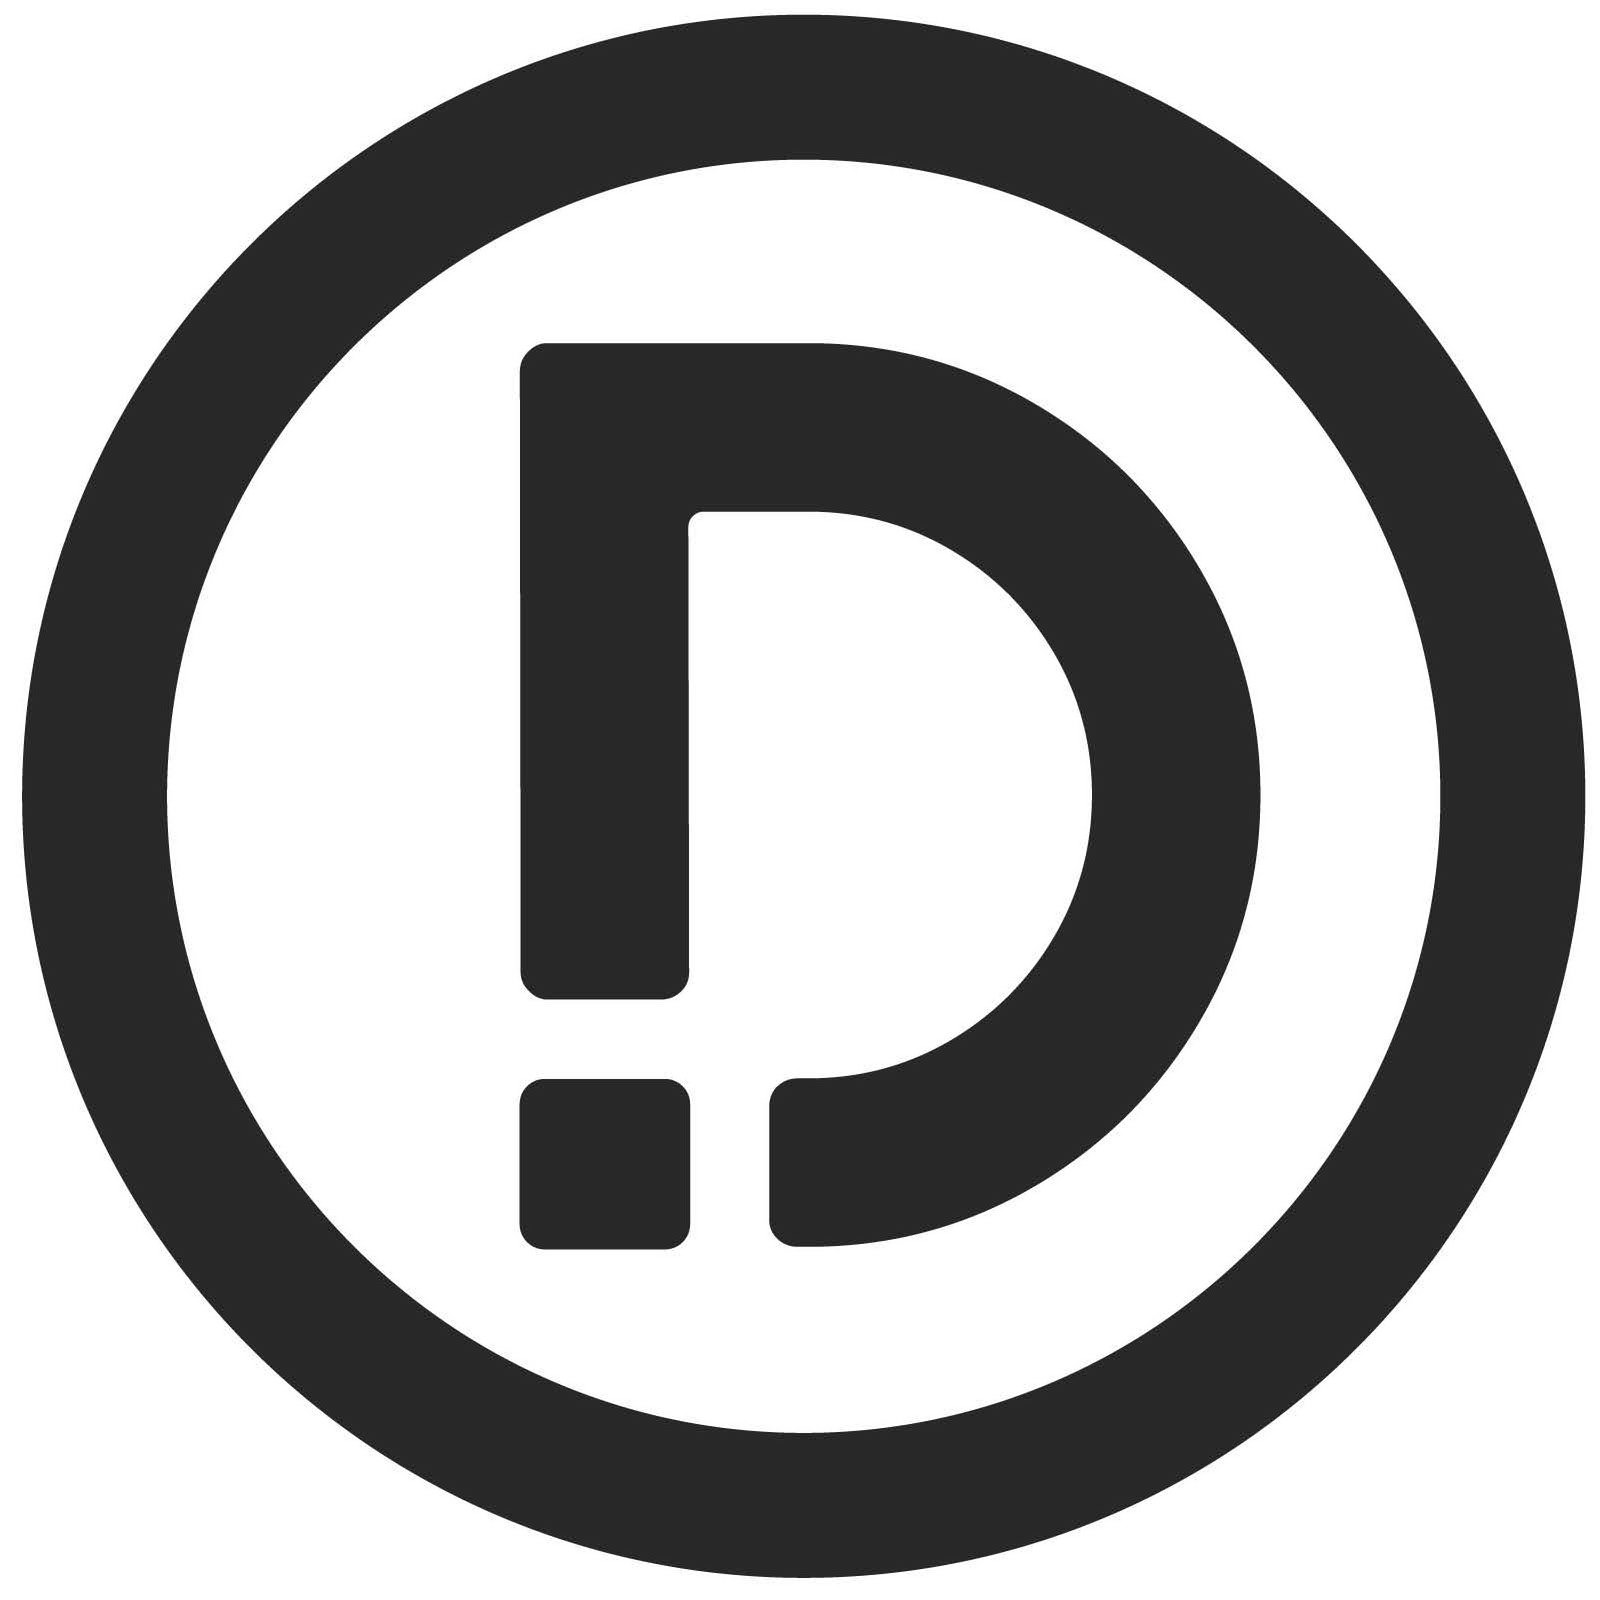 D - Doran, Raymond Trademark Registration